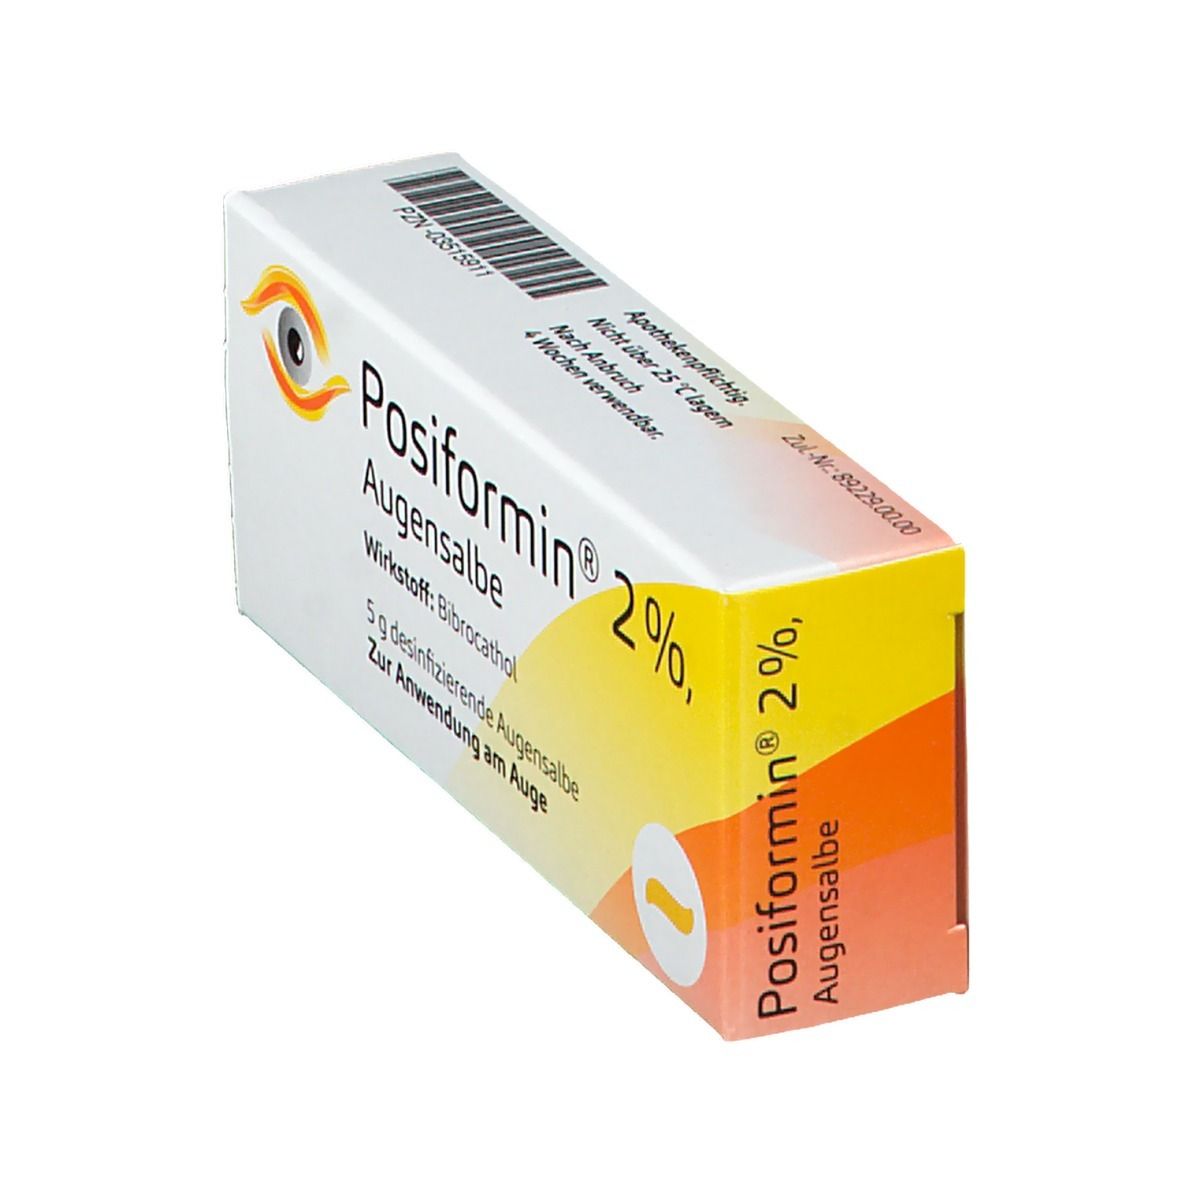 Posiformin 2% 5 g - shop-apotheke.com